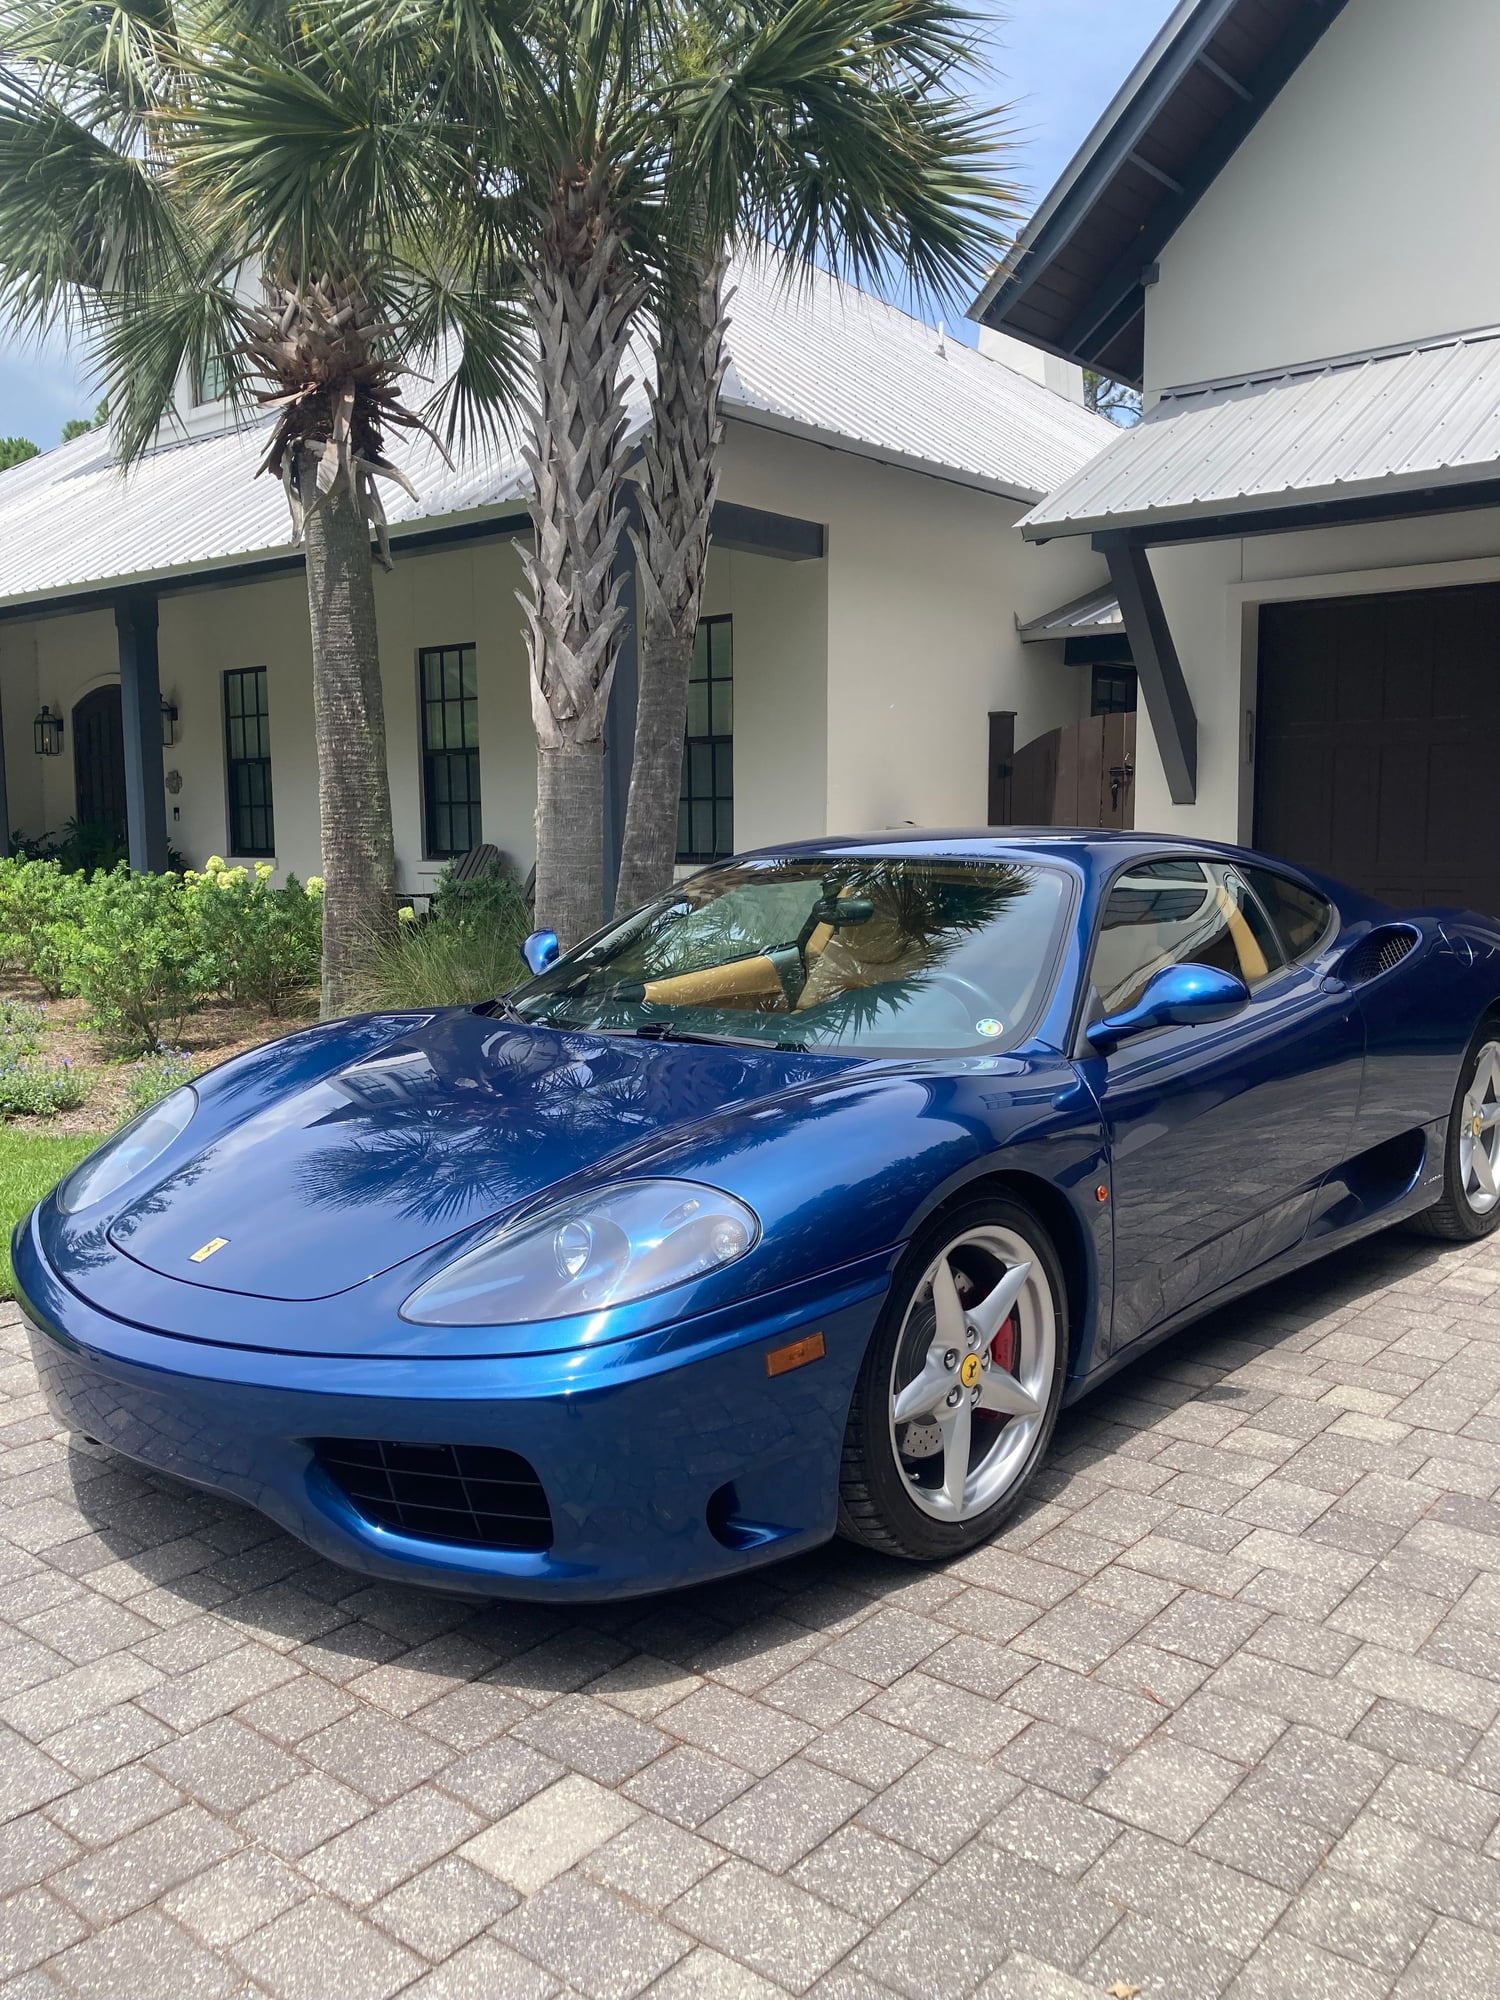 2002 Ferrari 360 - 2002 Ferrari 360 Modena, 6-speed manual, 24k miles, NART Blue with... - Used - VIN 1ZFFYU51A42012860 - Manual - Coupe - Blue - Santa Rosa Beach, FL 32459, United States